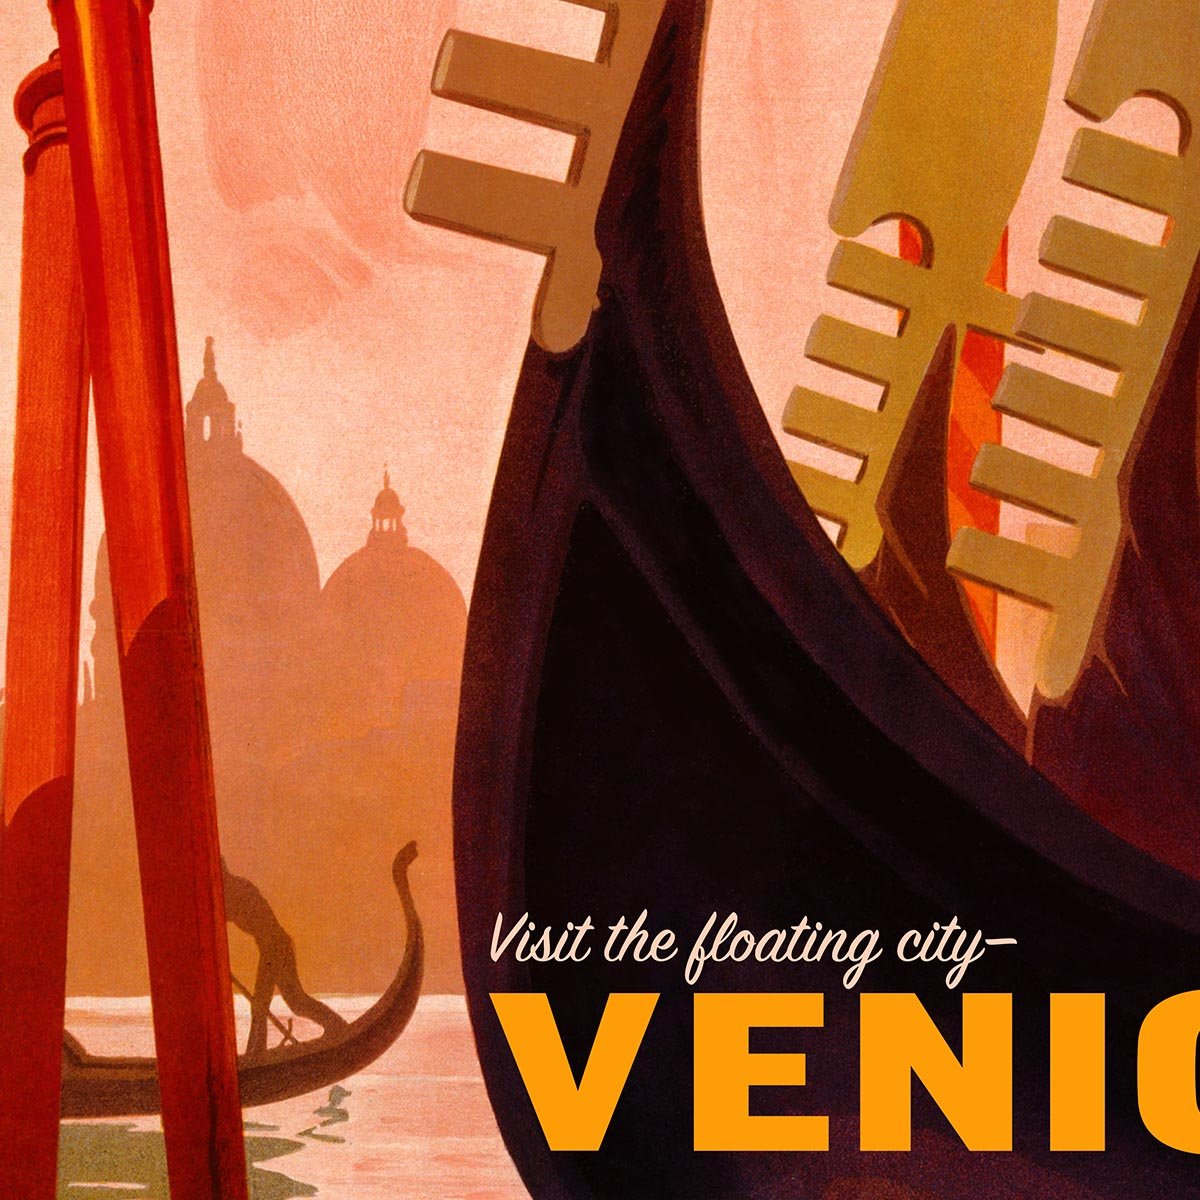 Venice Italy Travel Poster